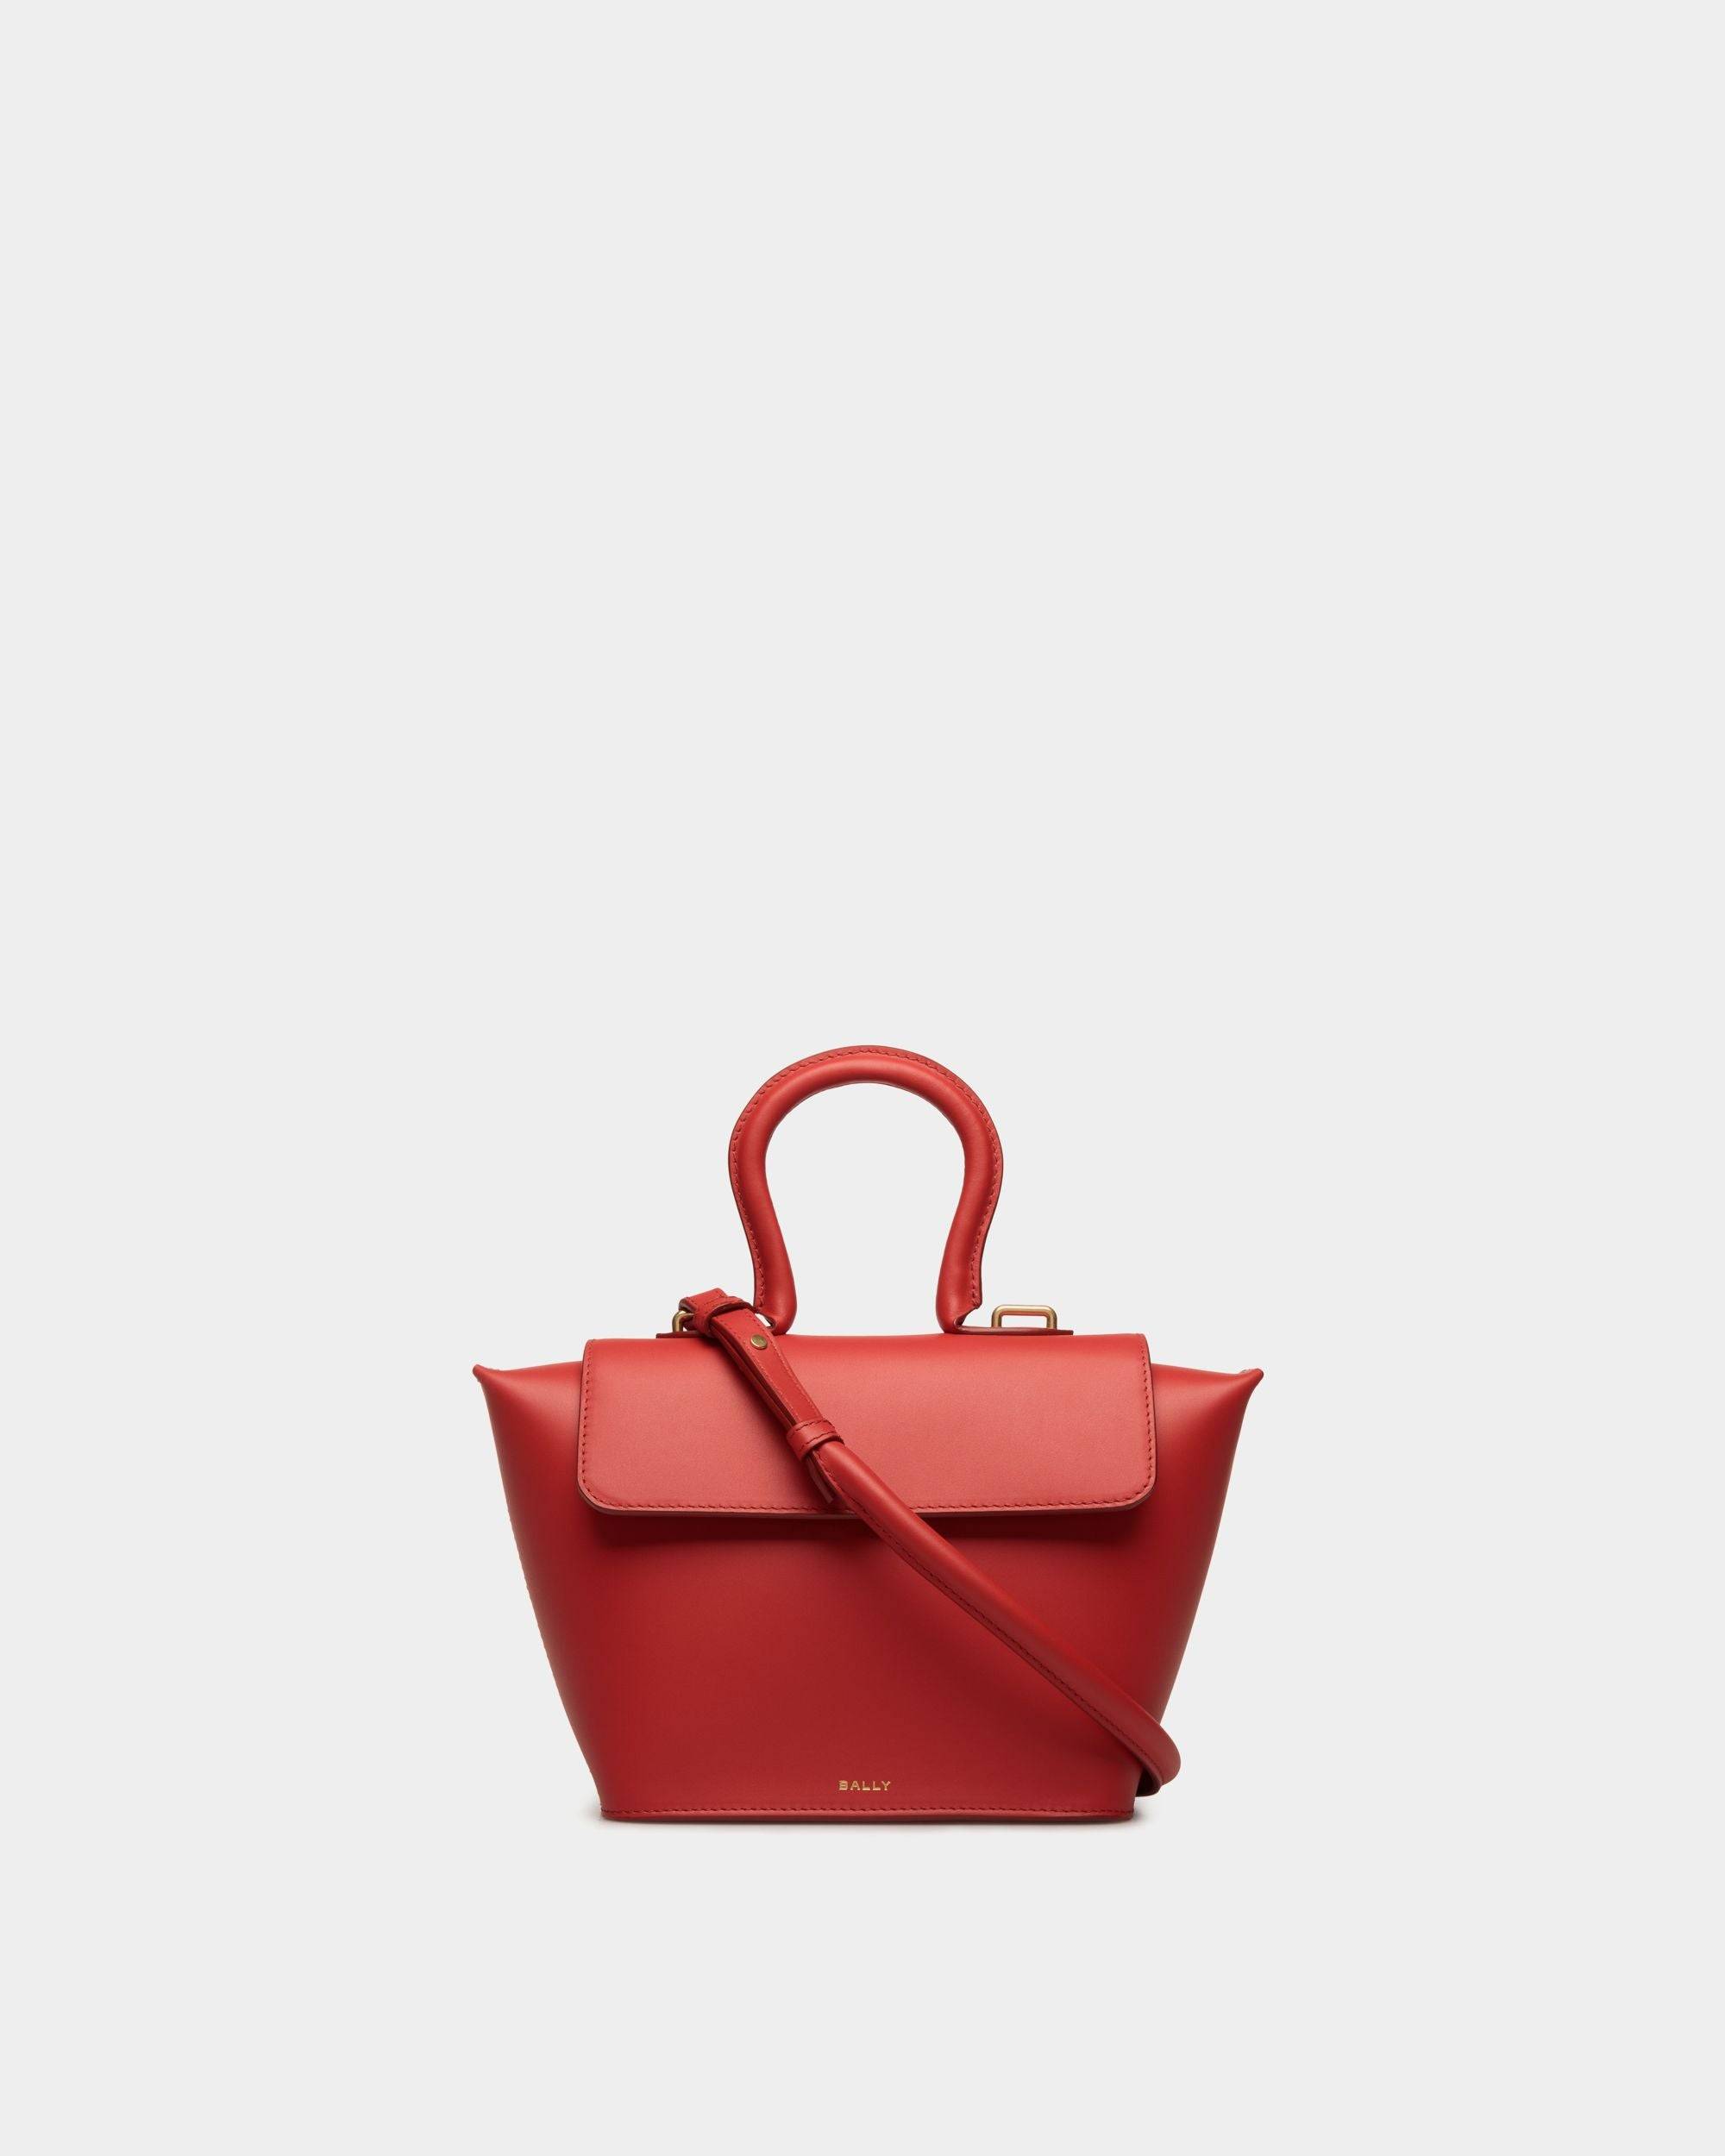 Brandroot New stylish Maroon Color design Primium looking Women handbag 2  Compartment |Ladies Purse Handbag